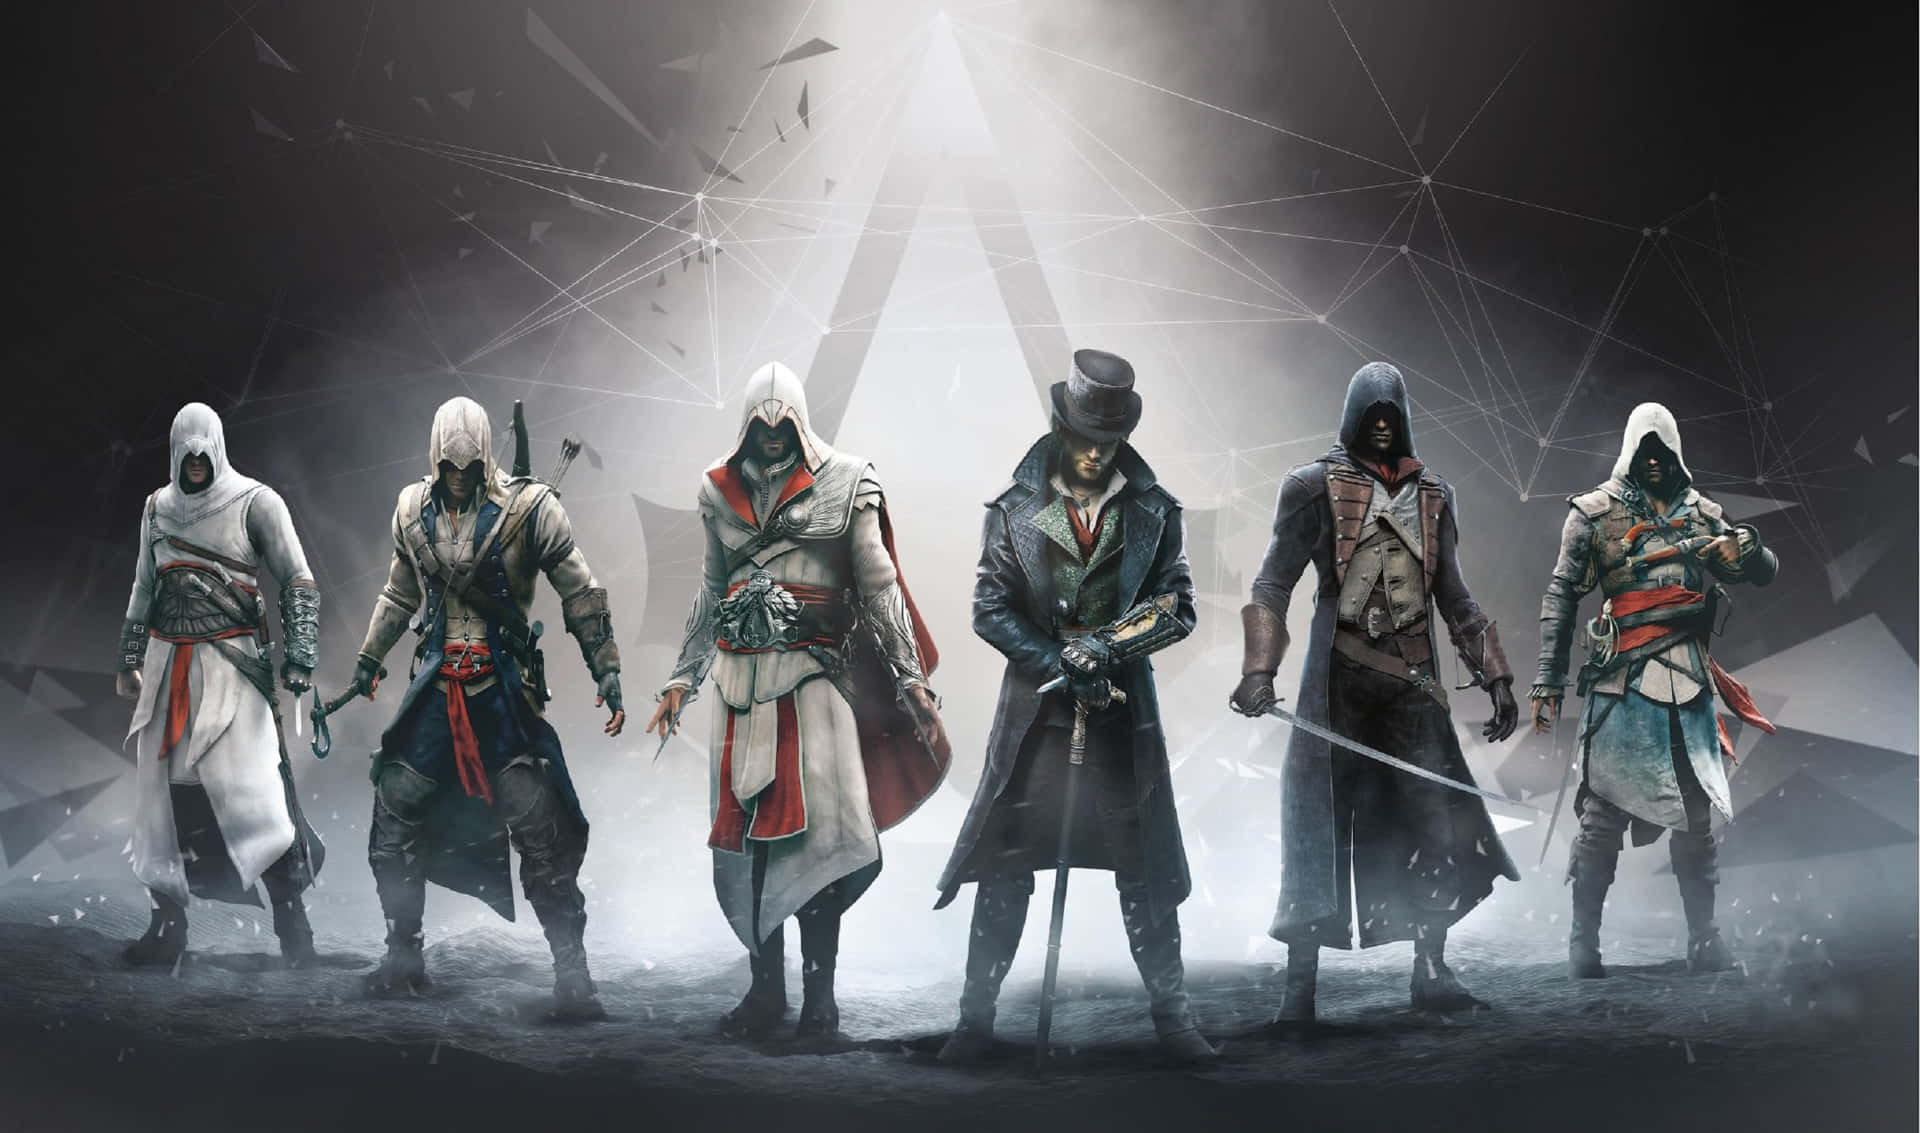 Fundode Tela De Assassin's Creed Odyssey Dos Protagonistas Em 2440x1440 Pixels.